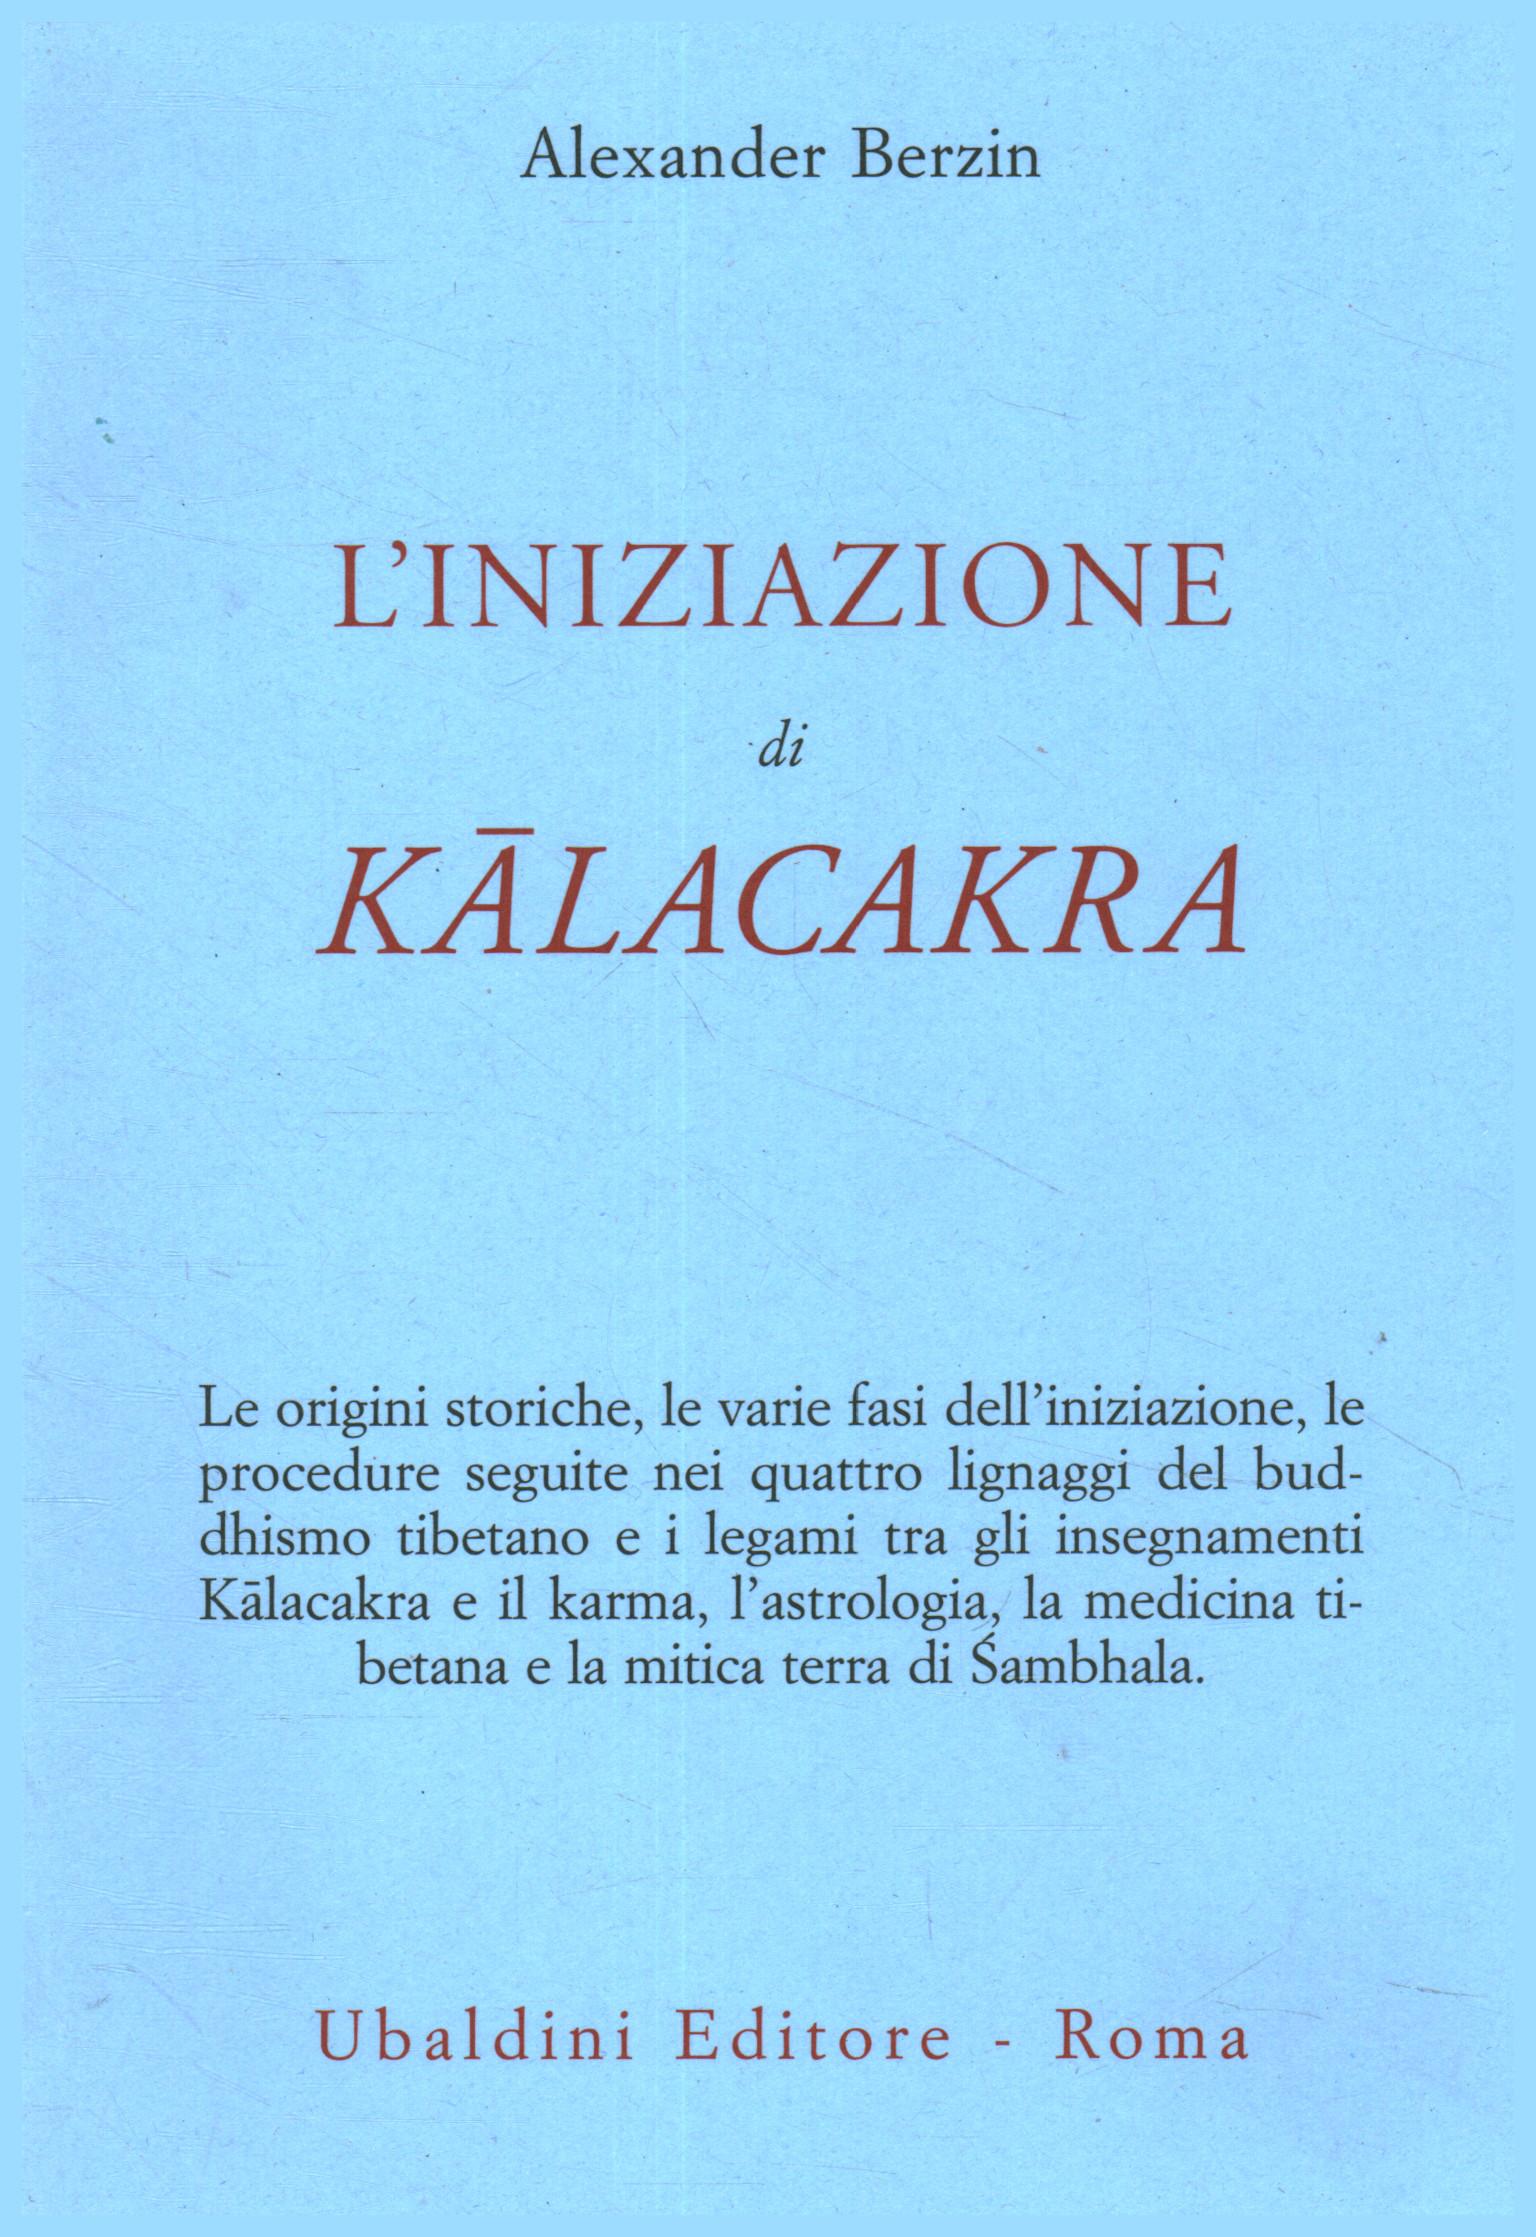 Initiation to the kālacakra